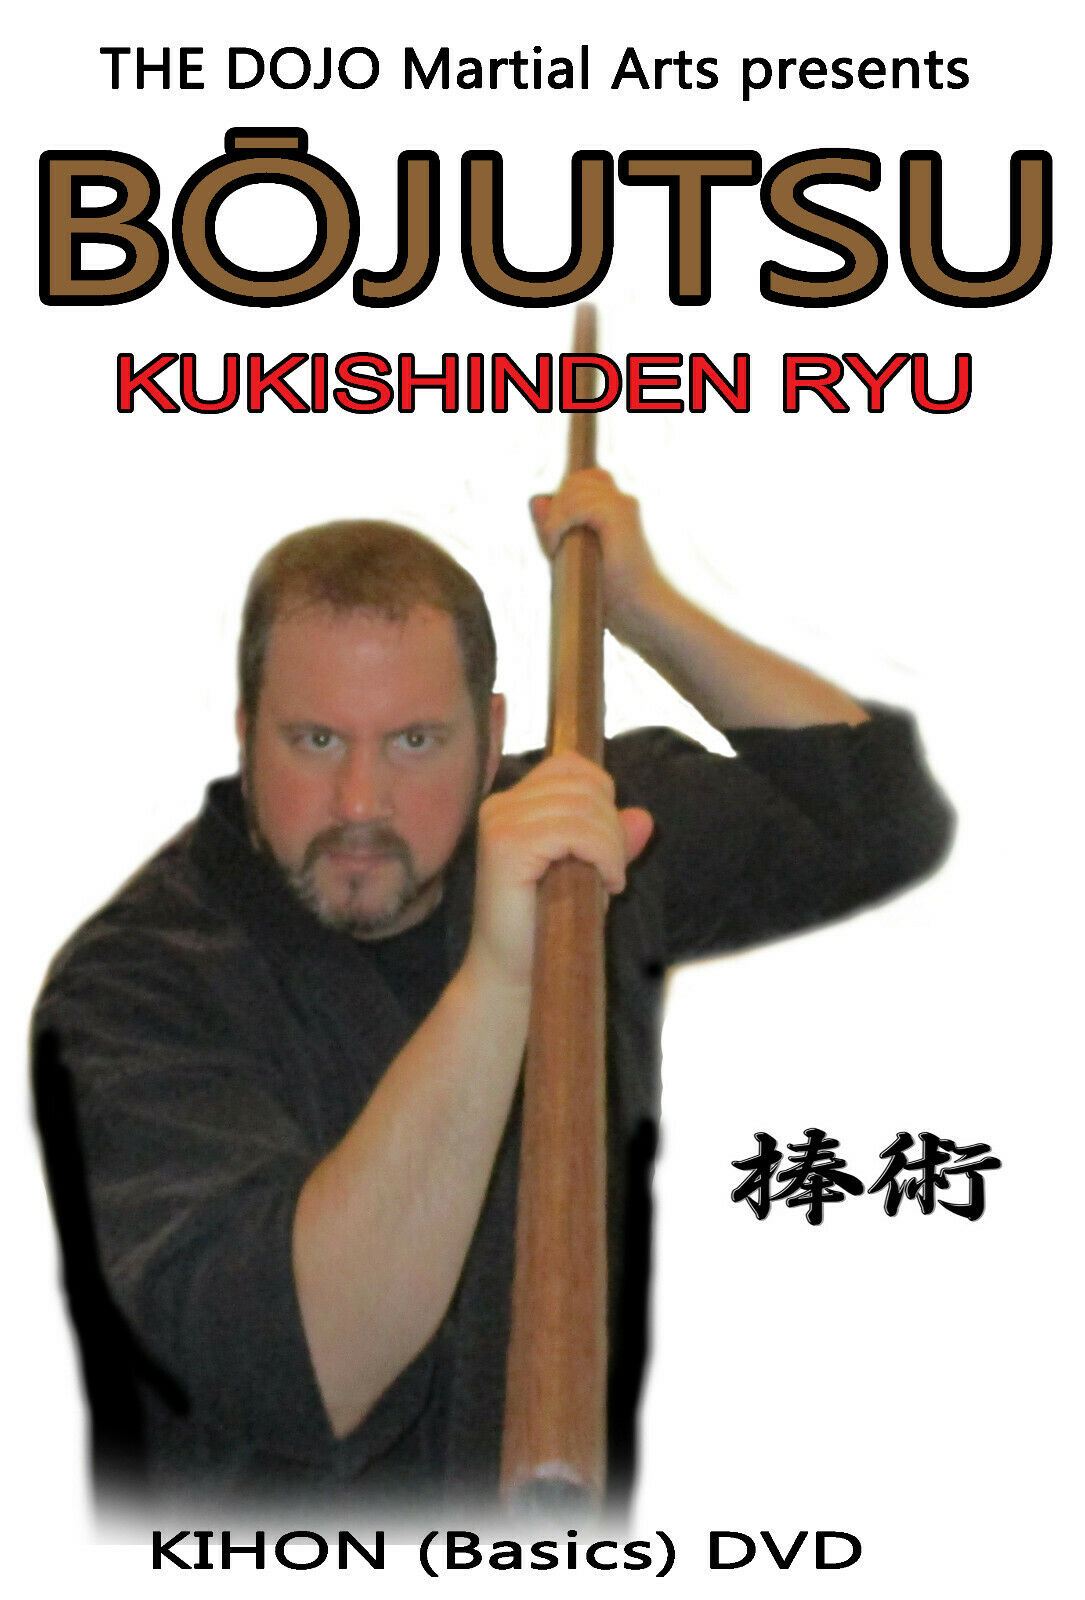 Kukishinden Ryu Bojutsu DVD with Todd Norcross - Budovideos Inc